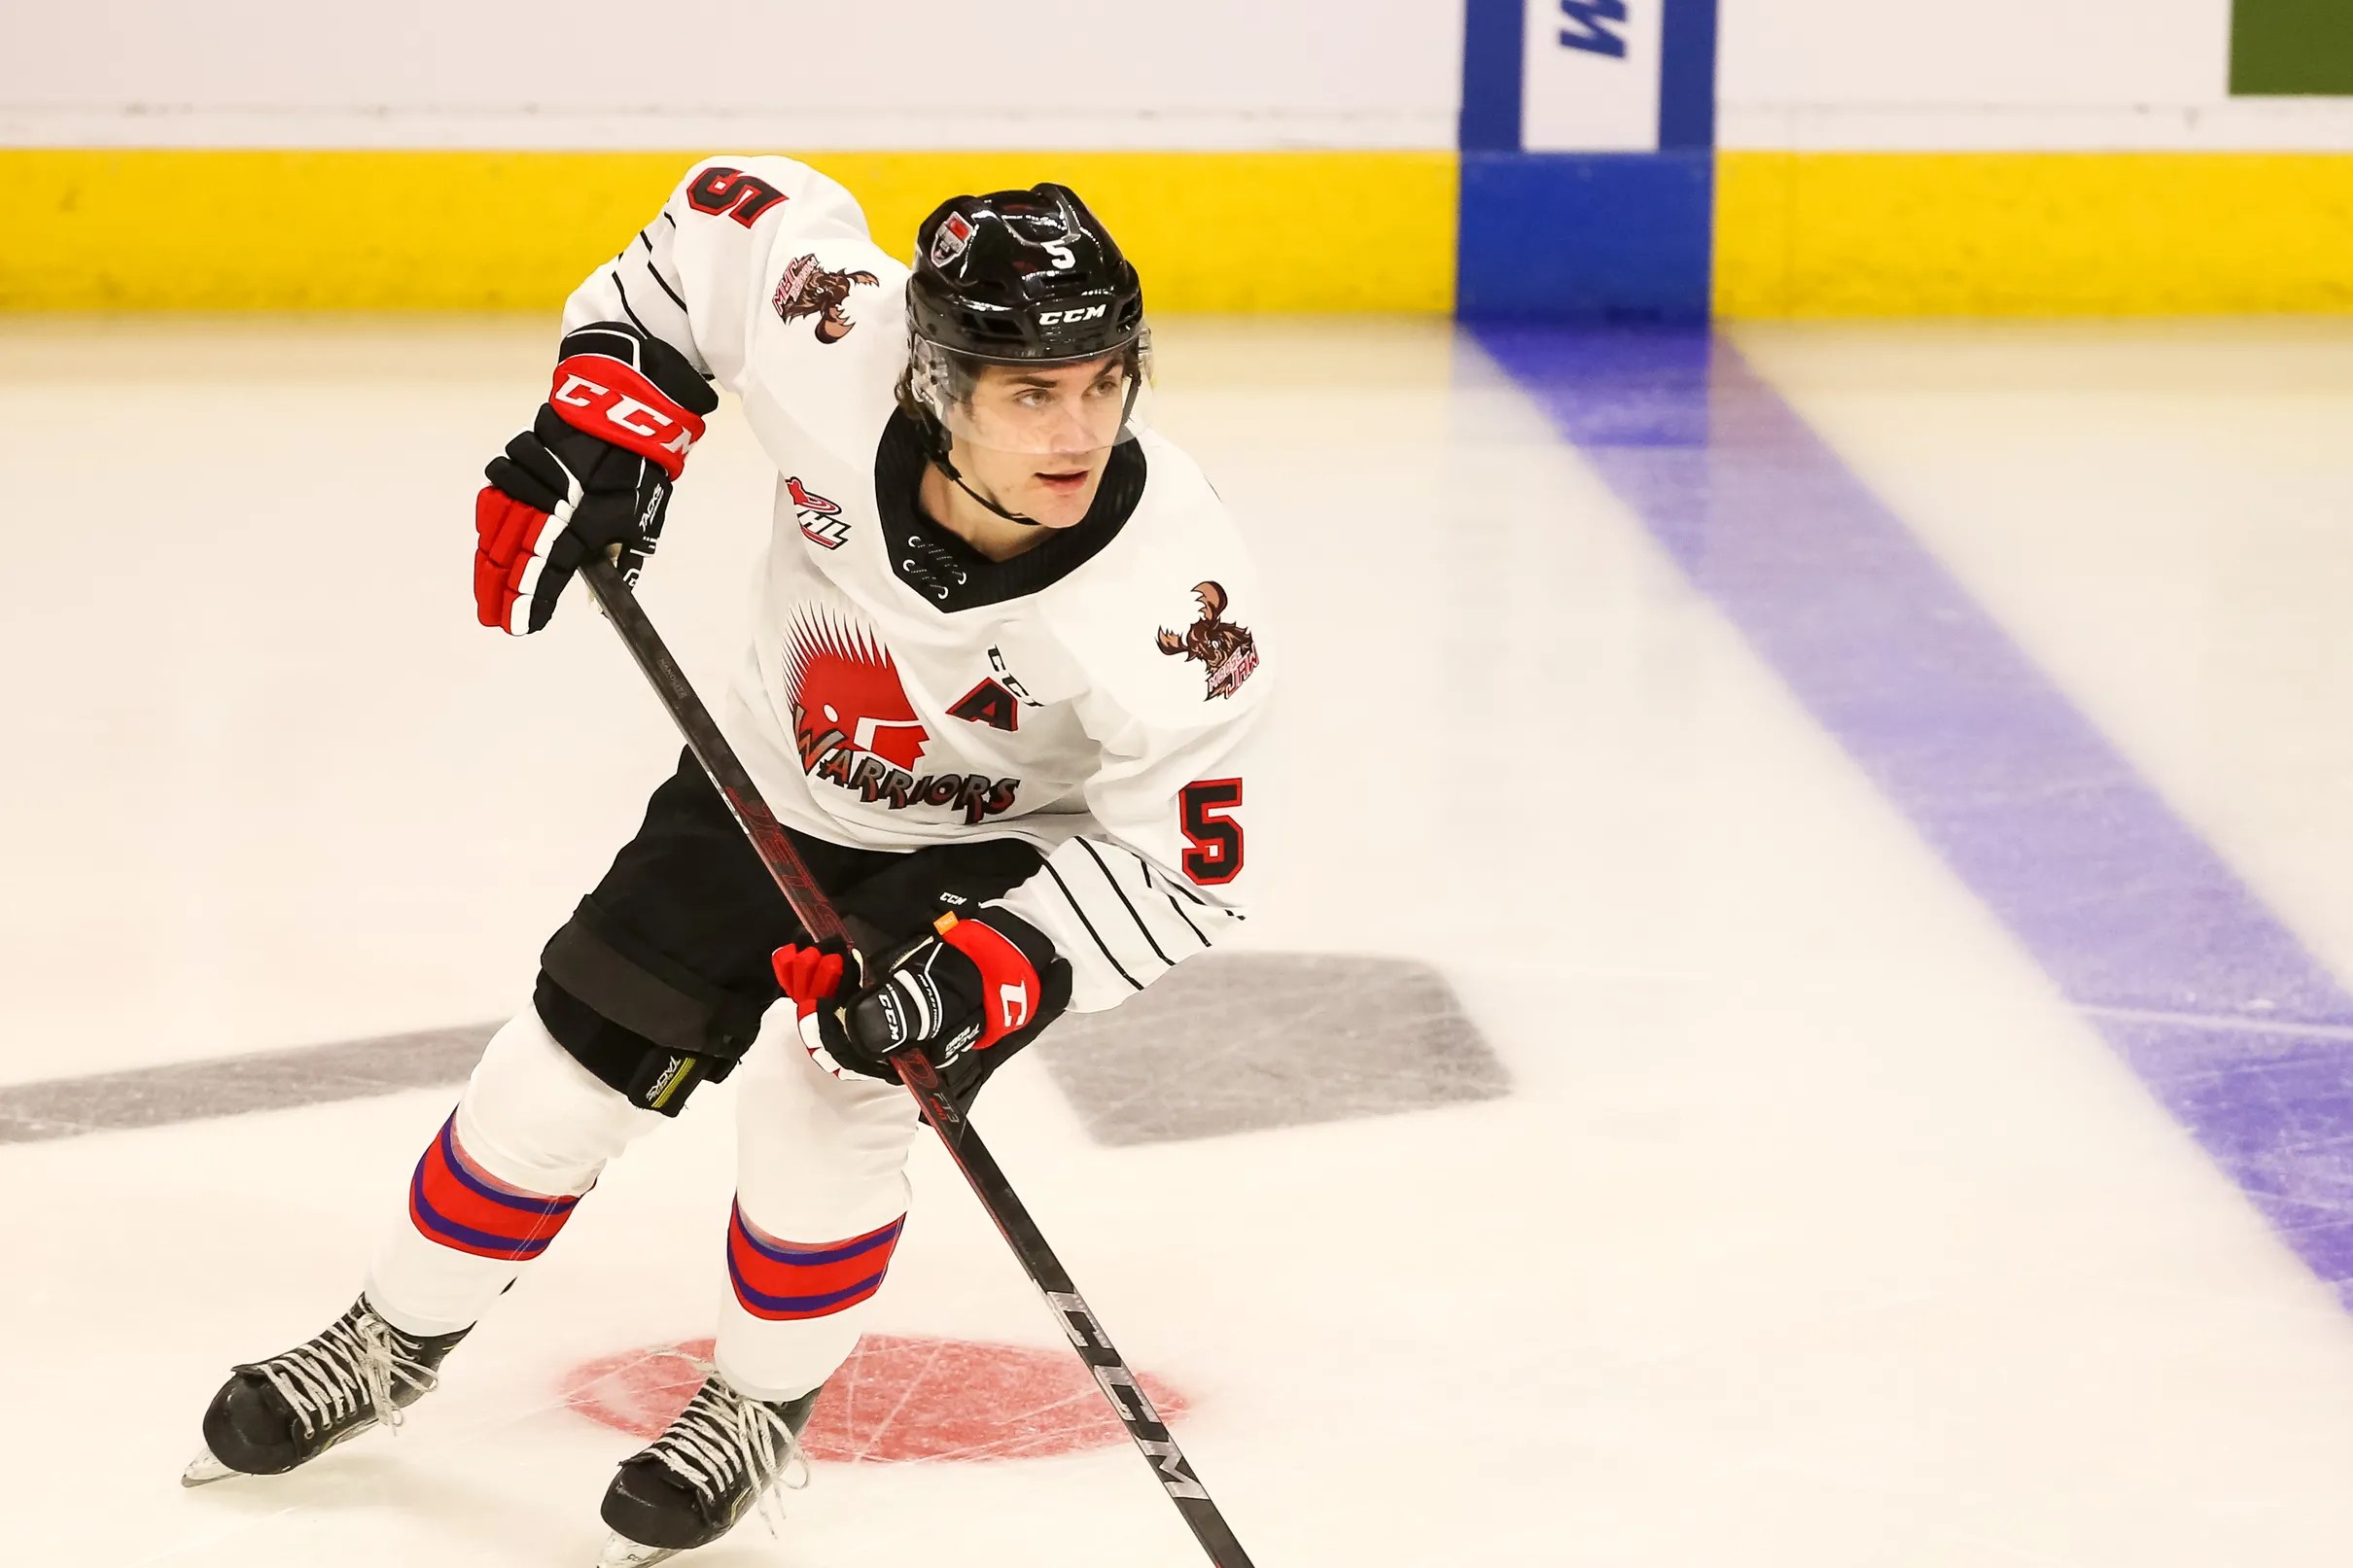 2022 NHL Draft prospect profile Denton Mateychuk is the most unique